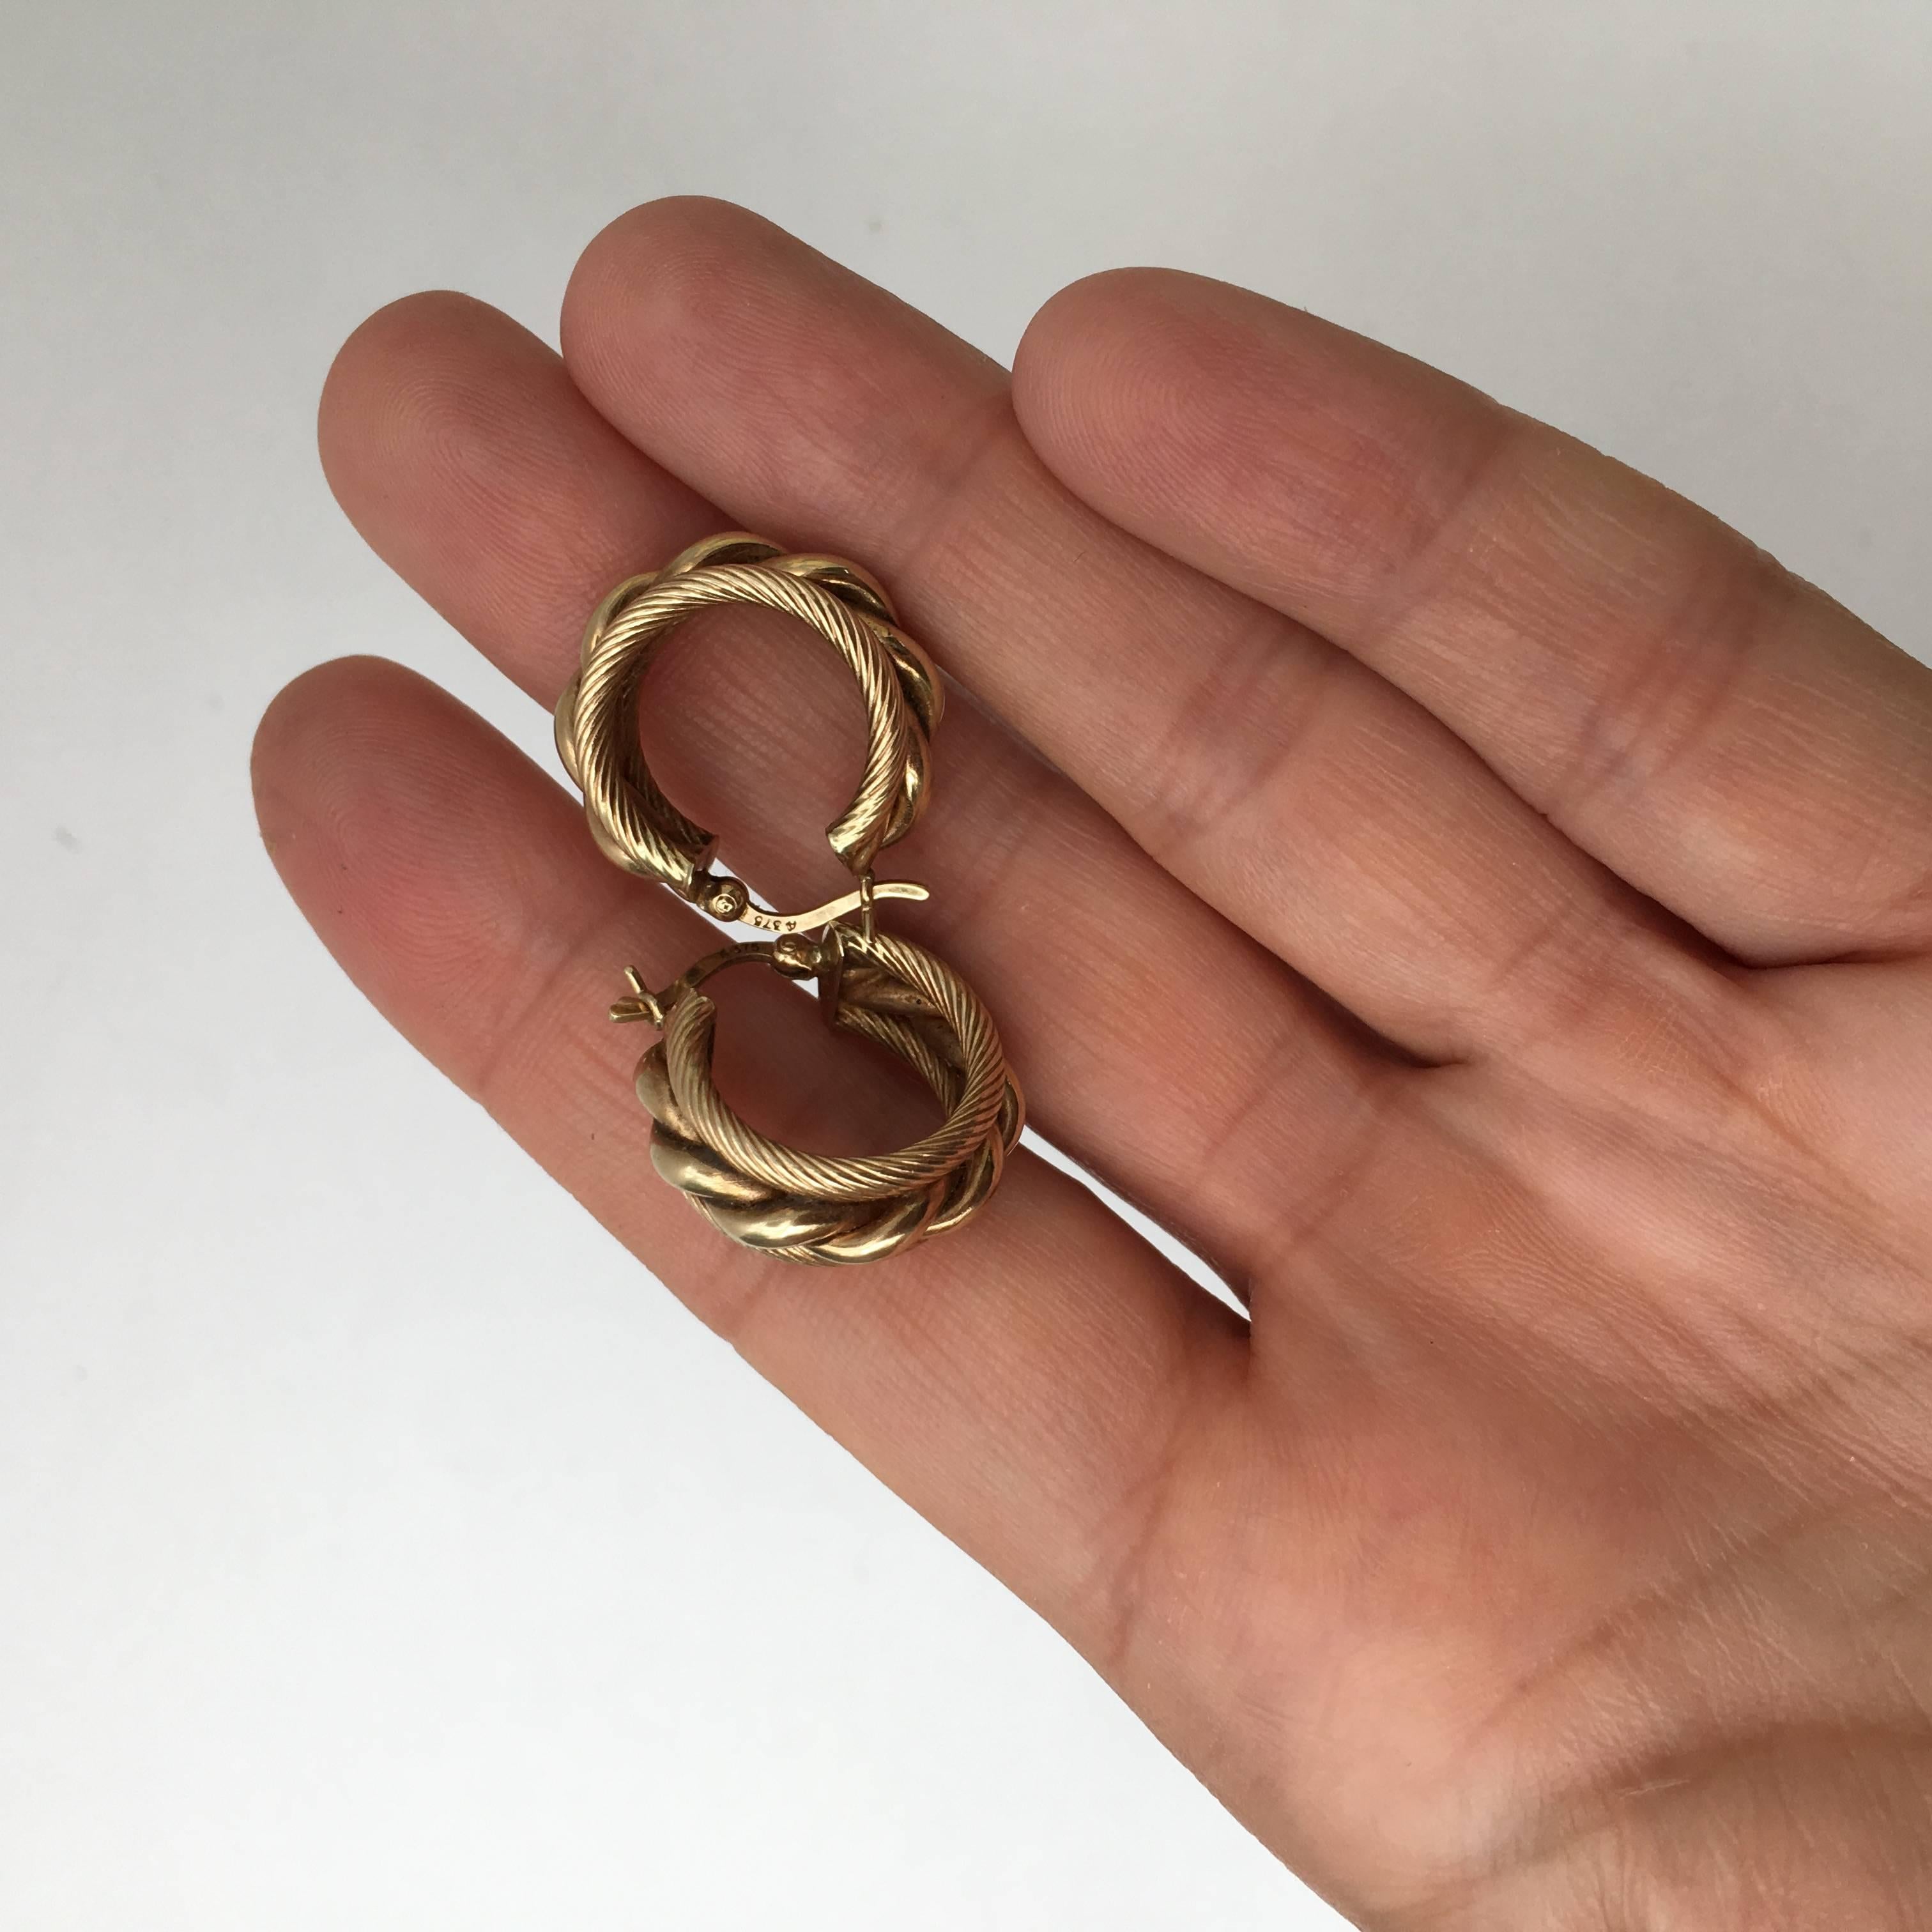 Women's or Men's Gold Hoop Earrings Twisted Rope Braided Nautical Vintage Jewelry Chunky Hoops